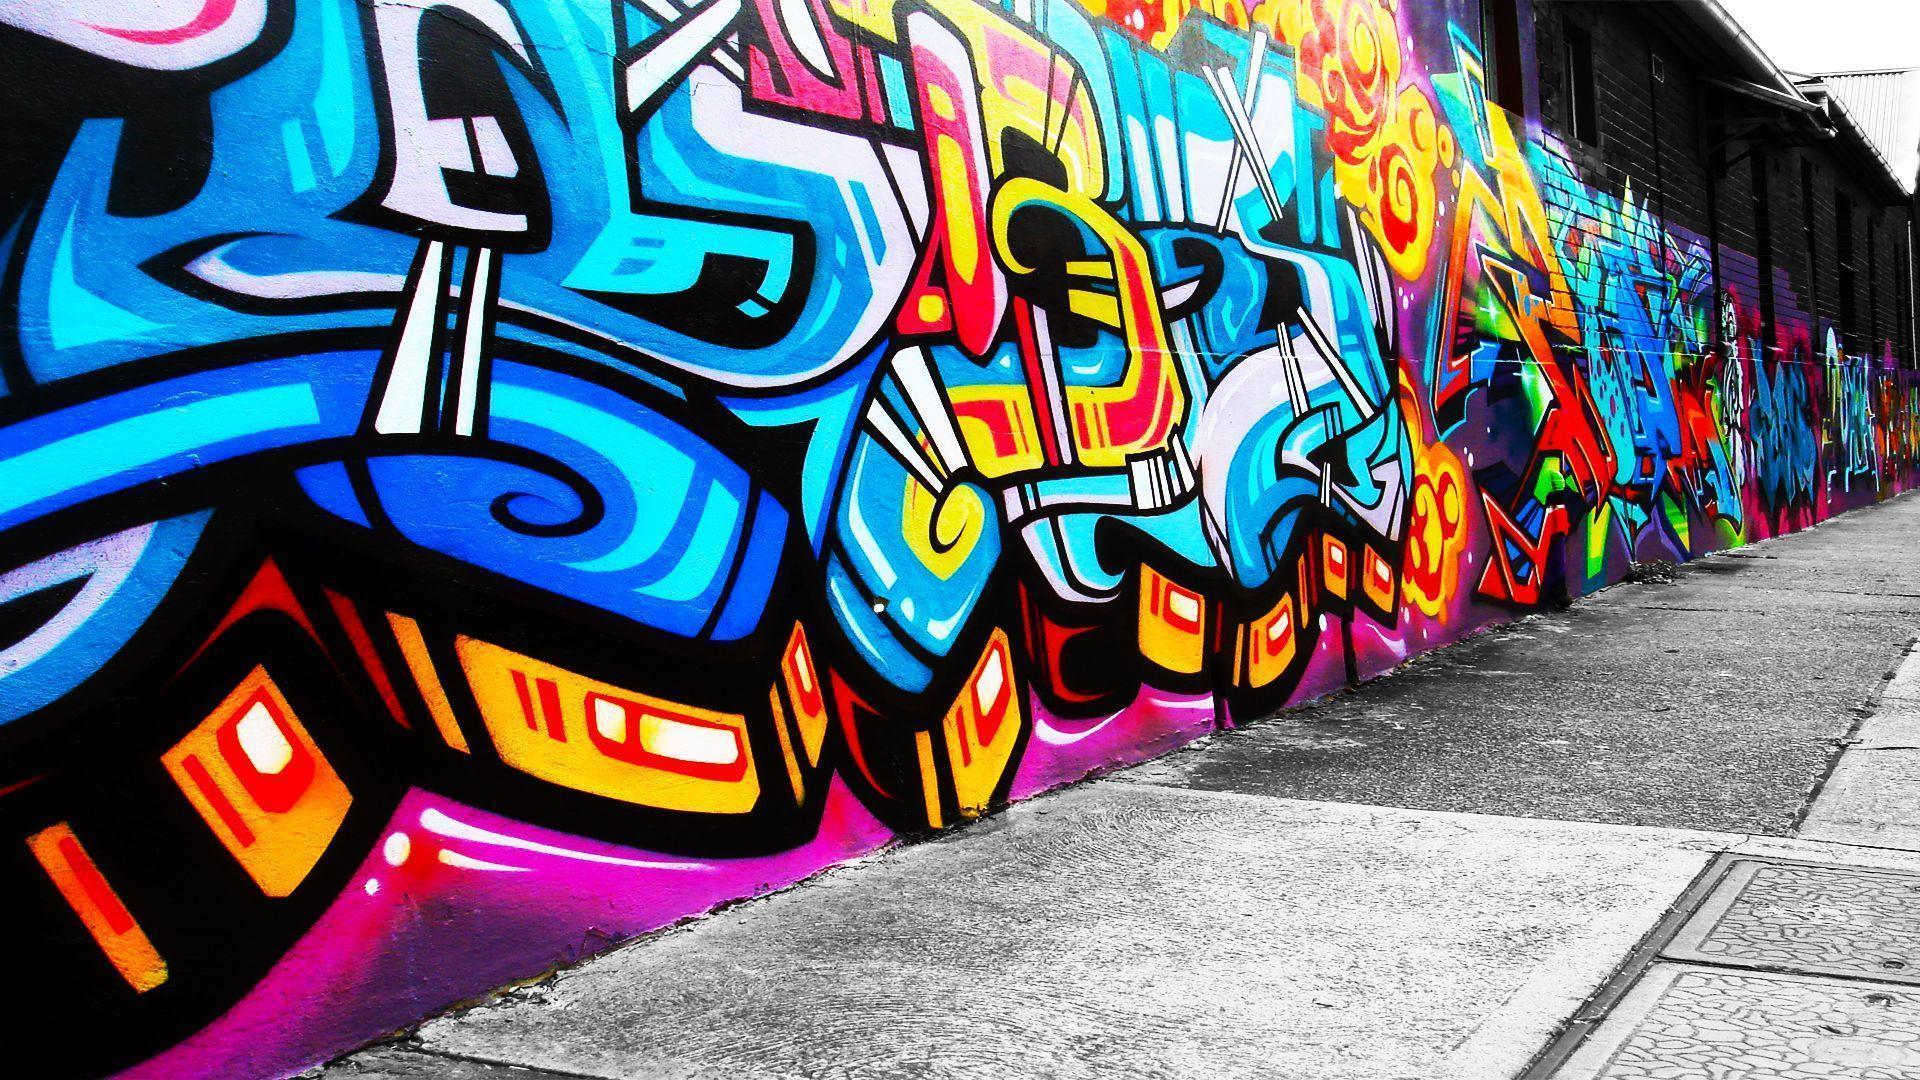 Cool Graffiti Art Wallpaper Free Download. Search, Graffiti